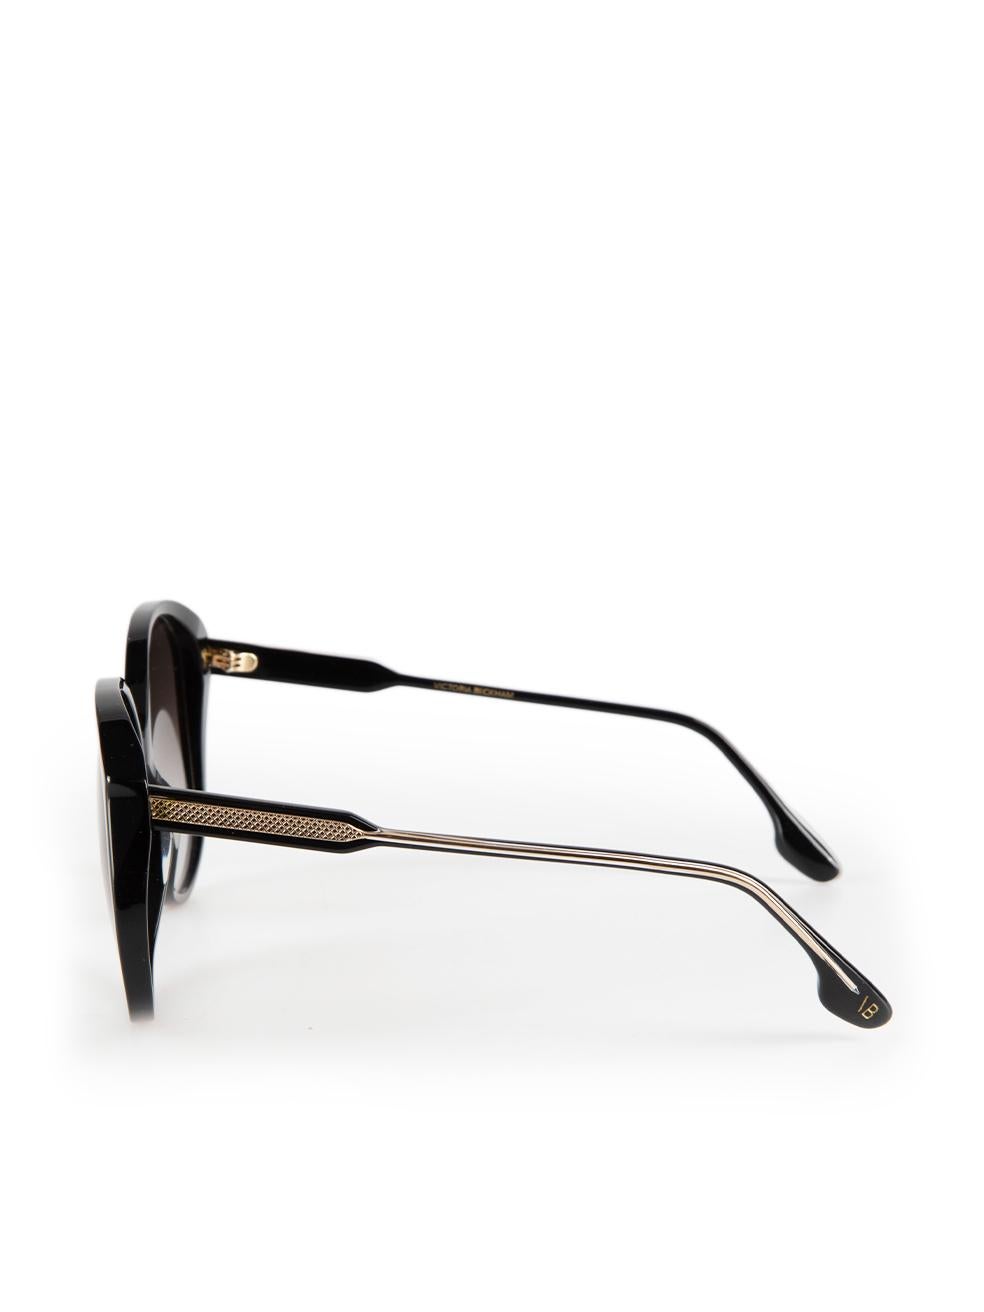 Victoria Beckham Black Round Gradient Sunglasses For Sale 1